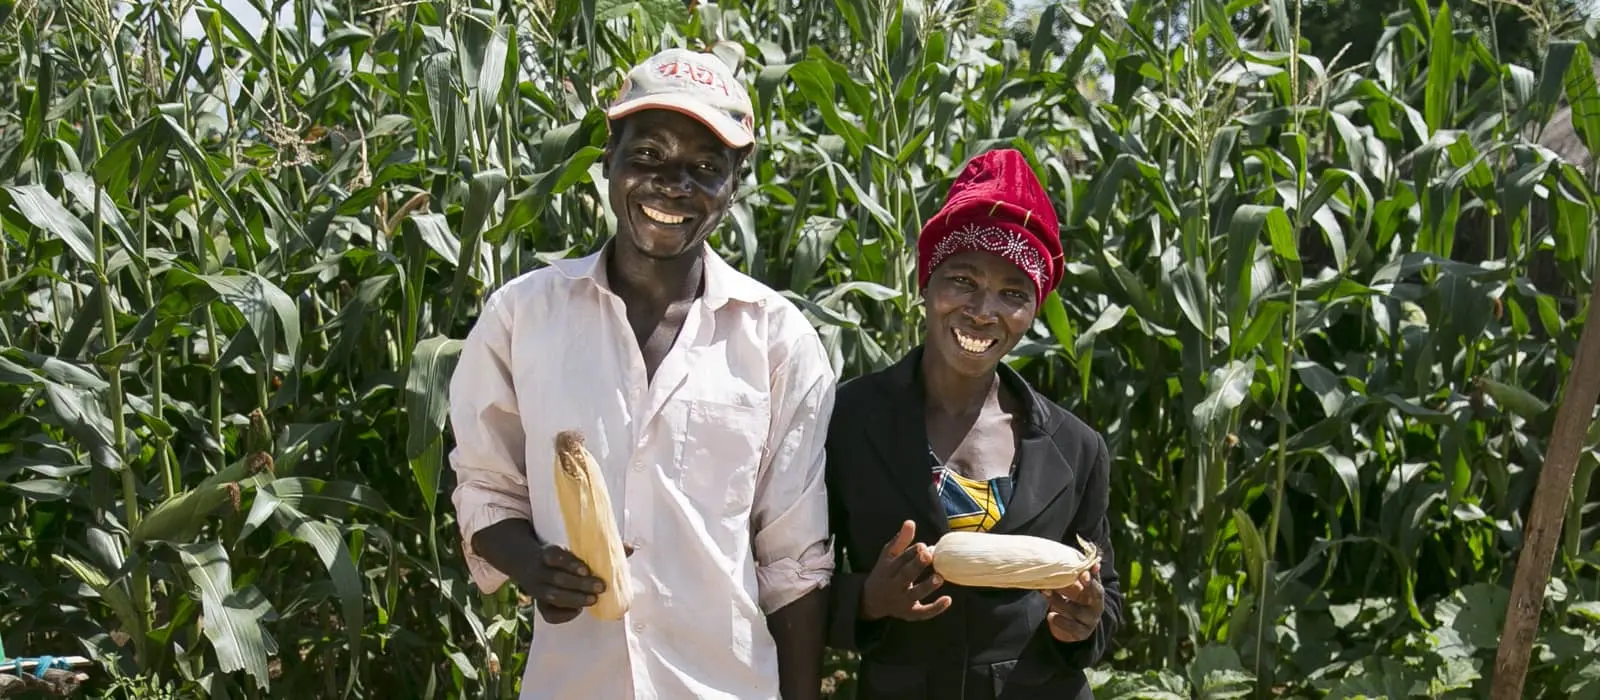 Two farmers standing in a corn field holding corn